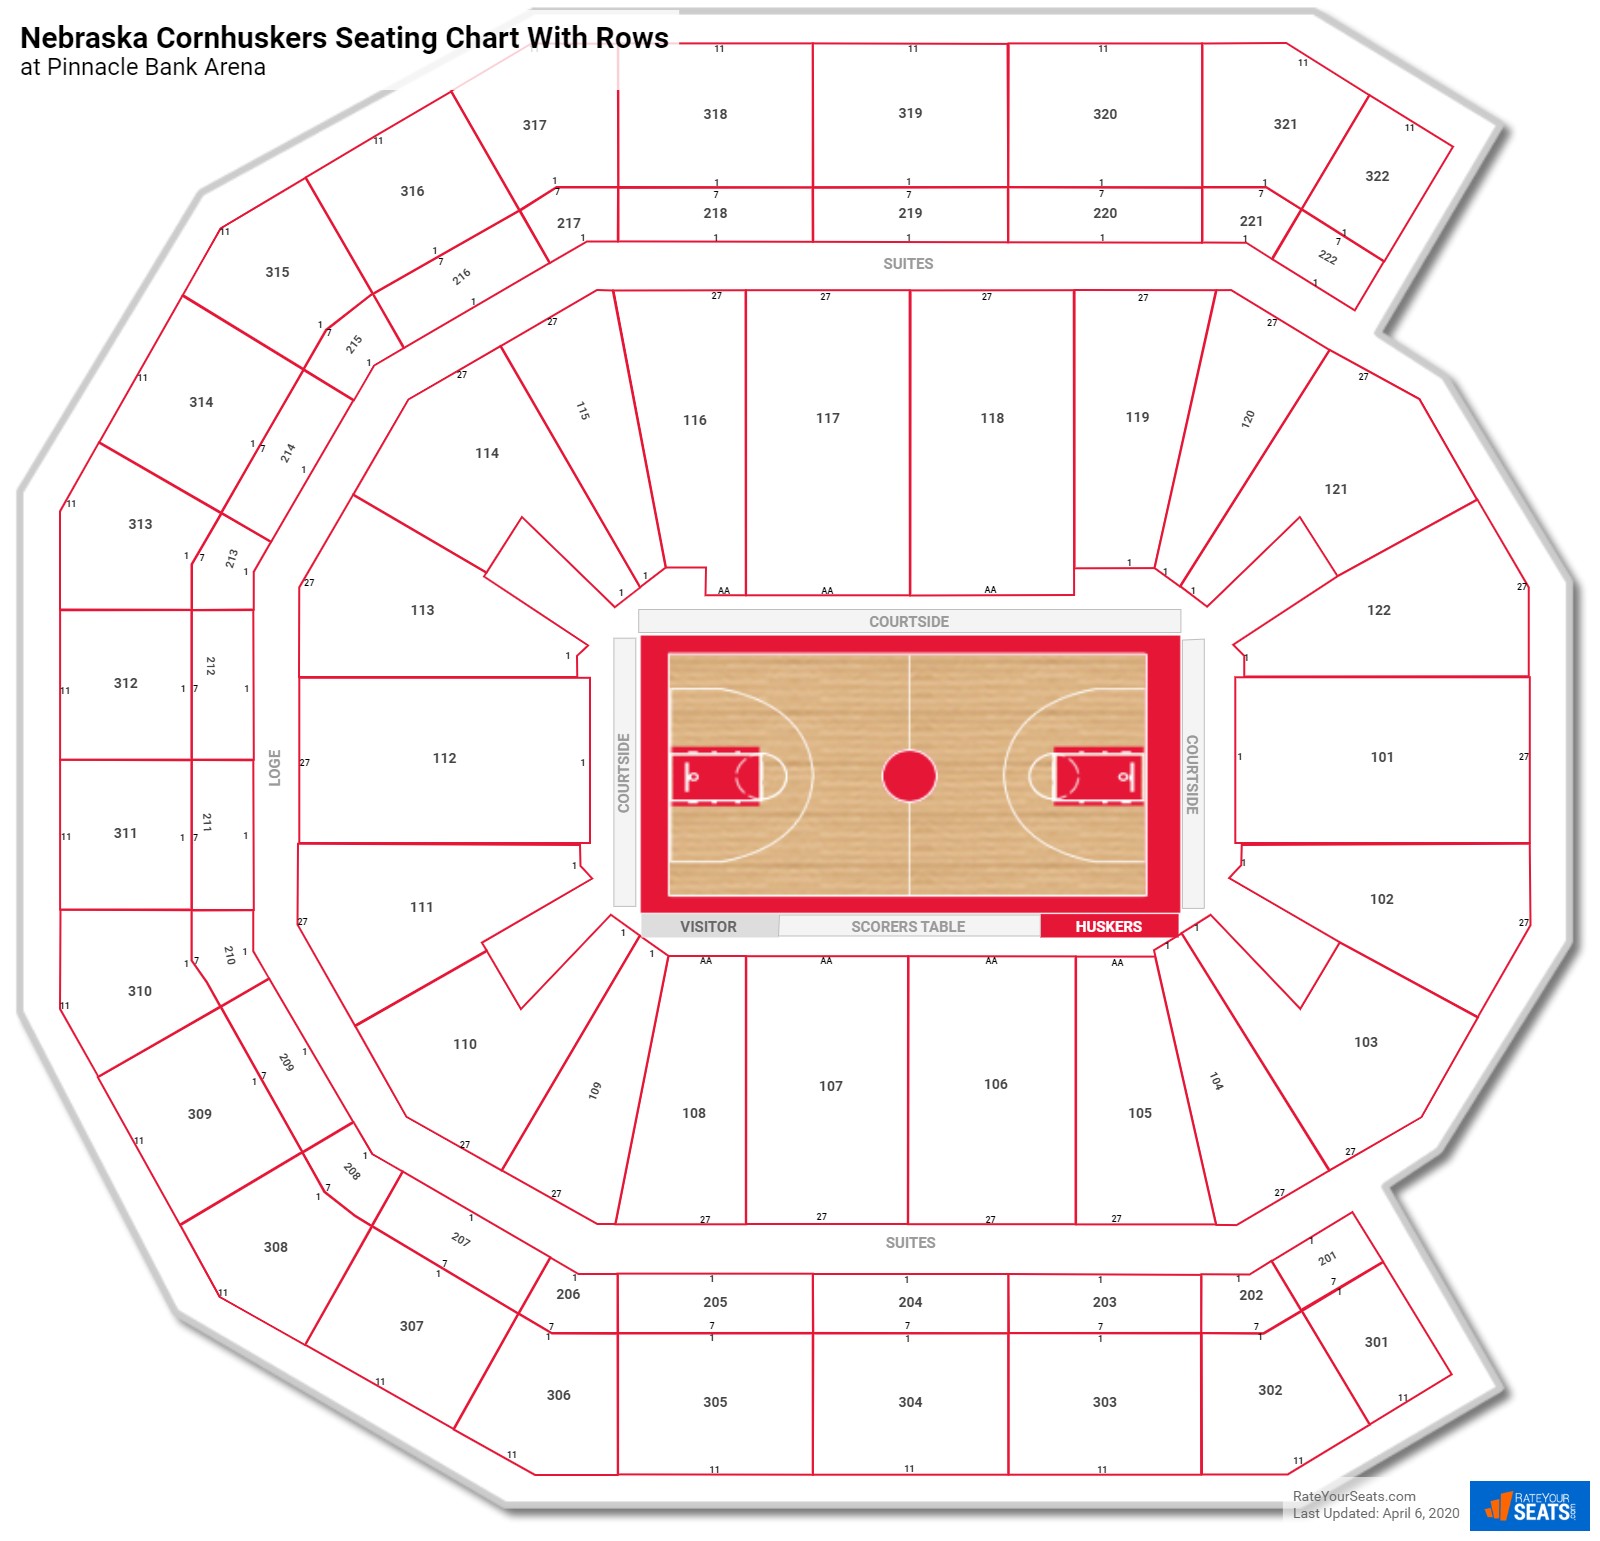 Pinnacle Bank Arena Seating Charts for Nebraska Basketball